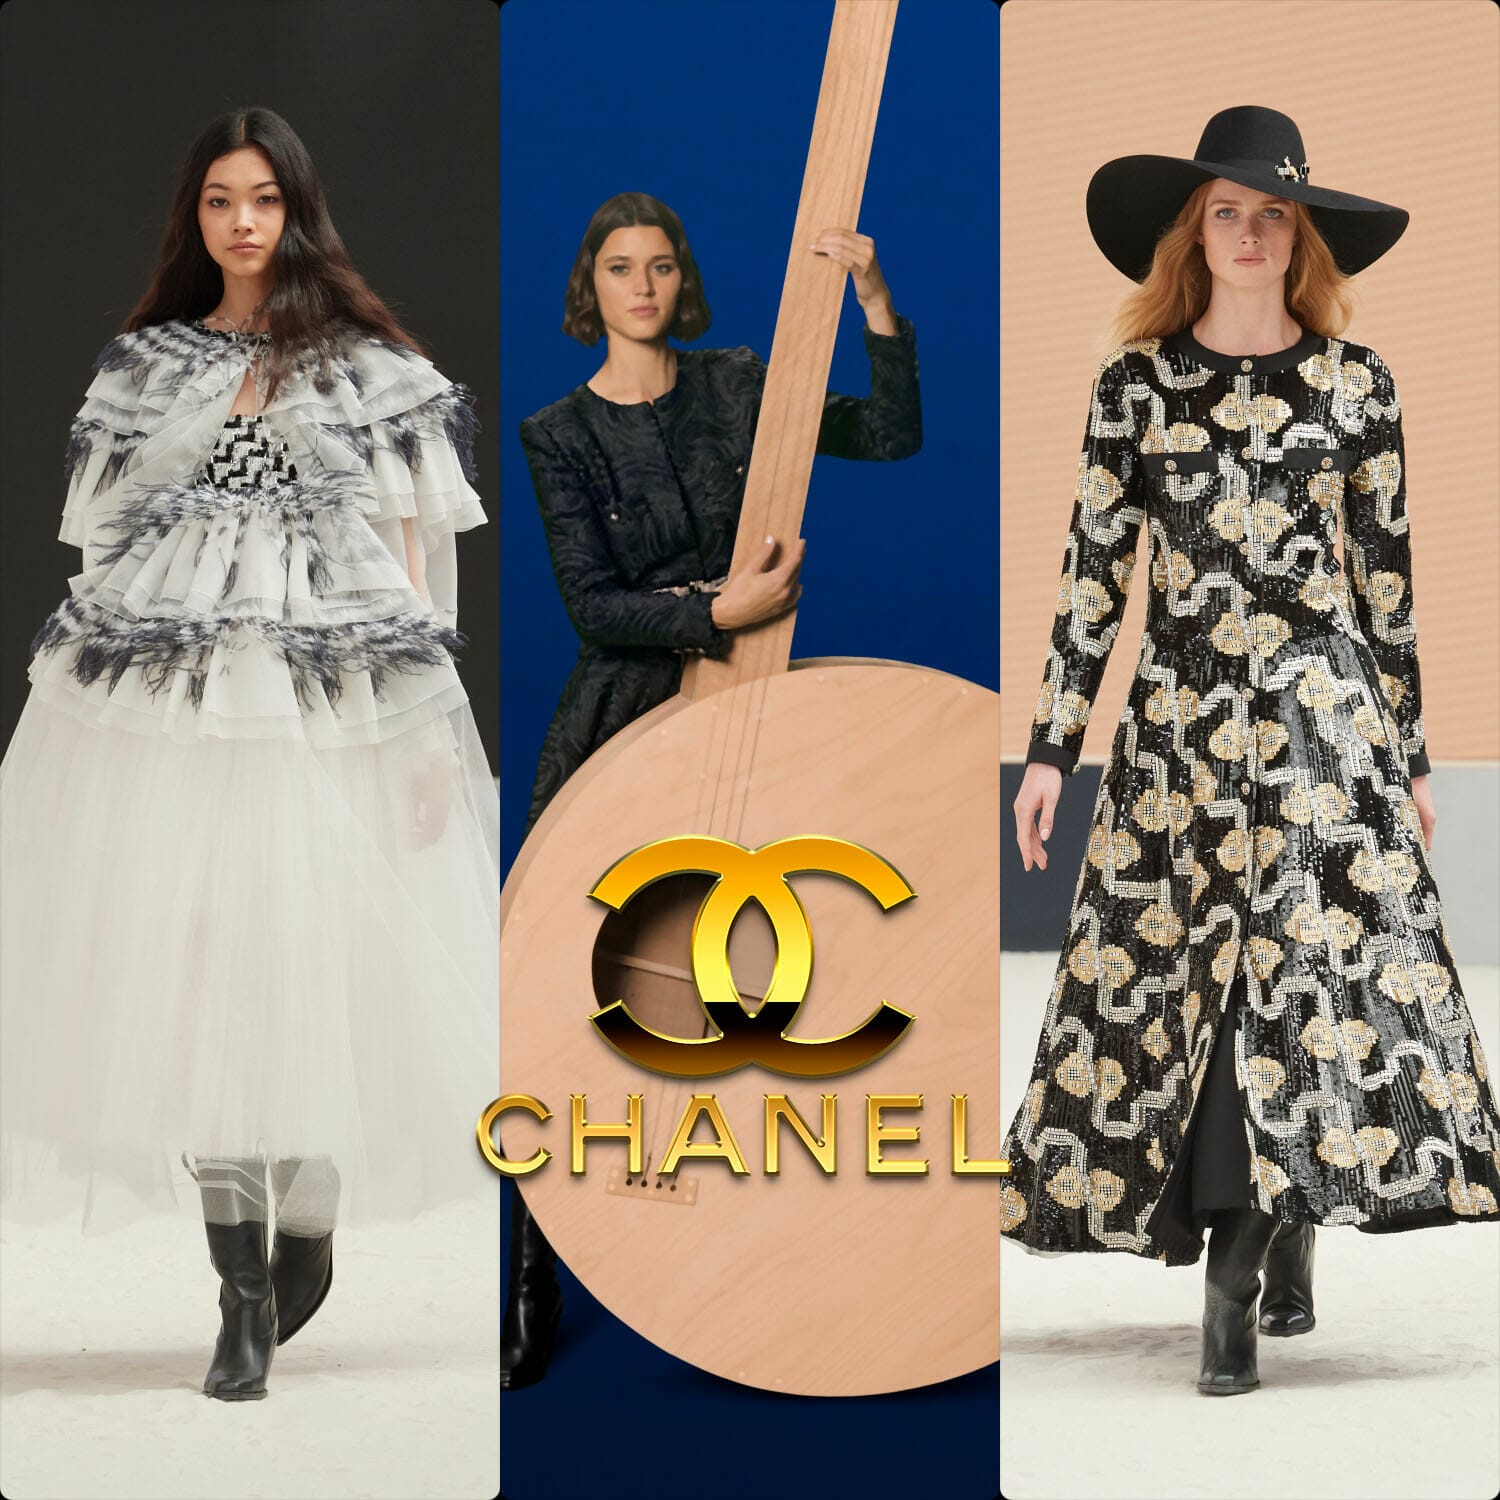 Chanel Beauty Fall-Winter 2023 - The Beauty Look Book